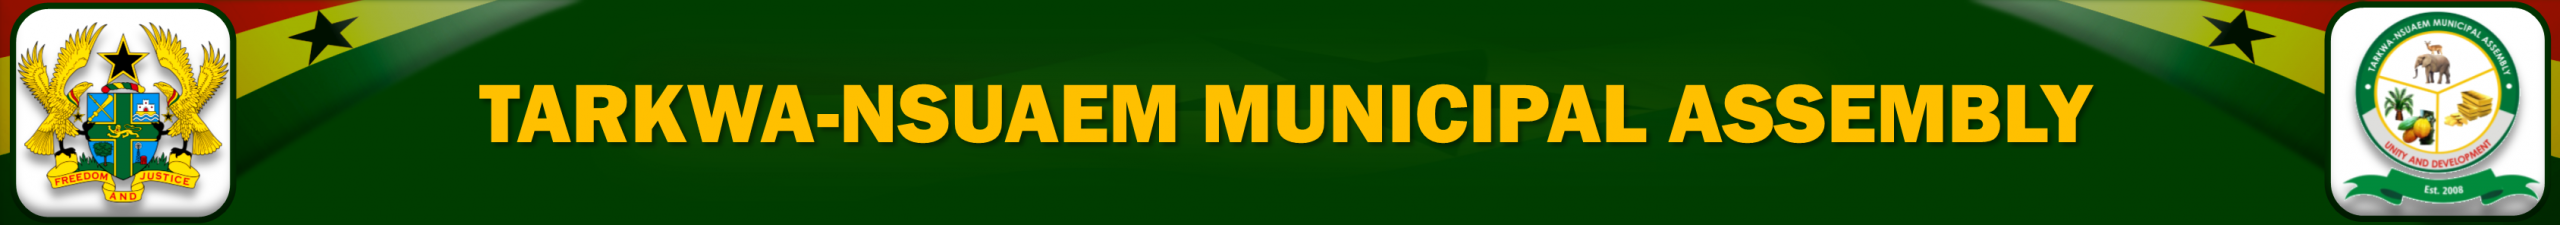 Tarkwa Nsuaem Municipal Assembly Logo